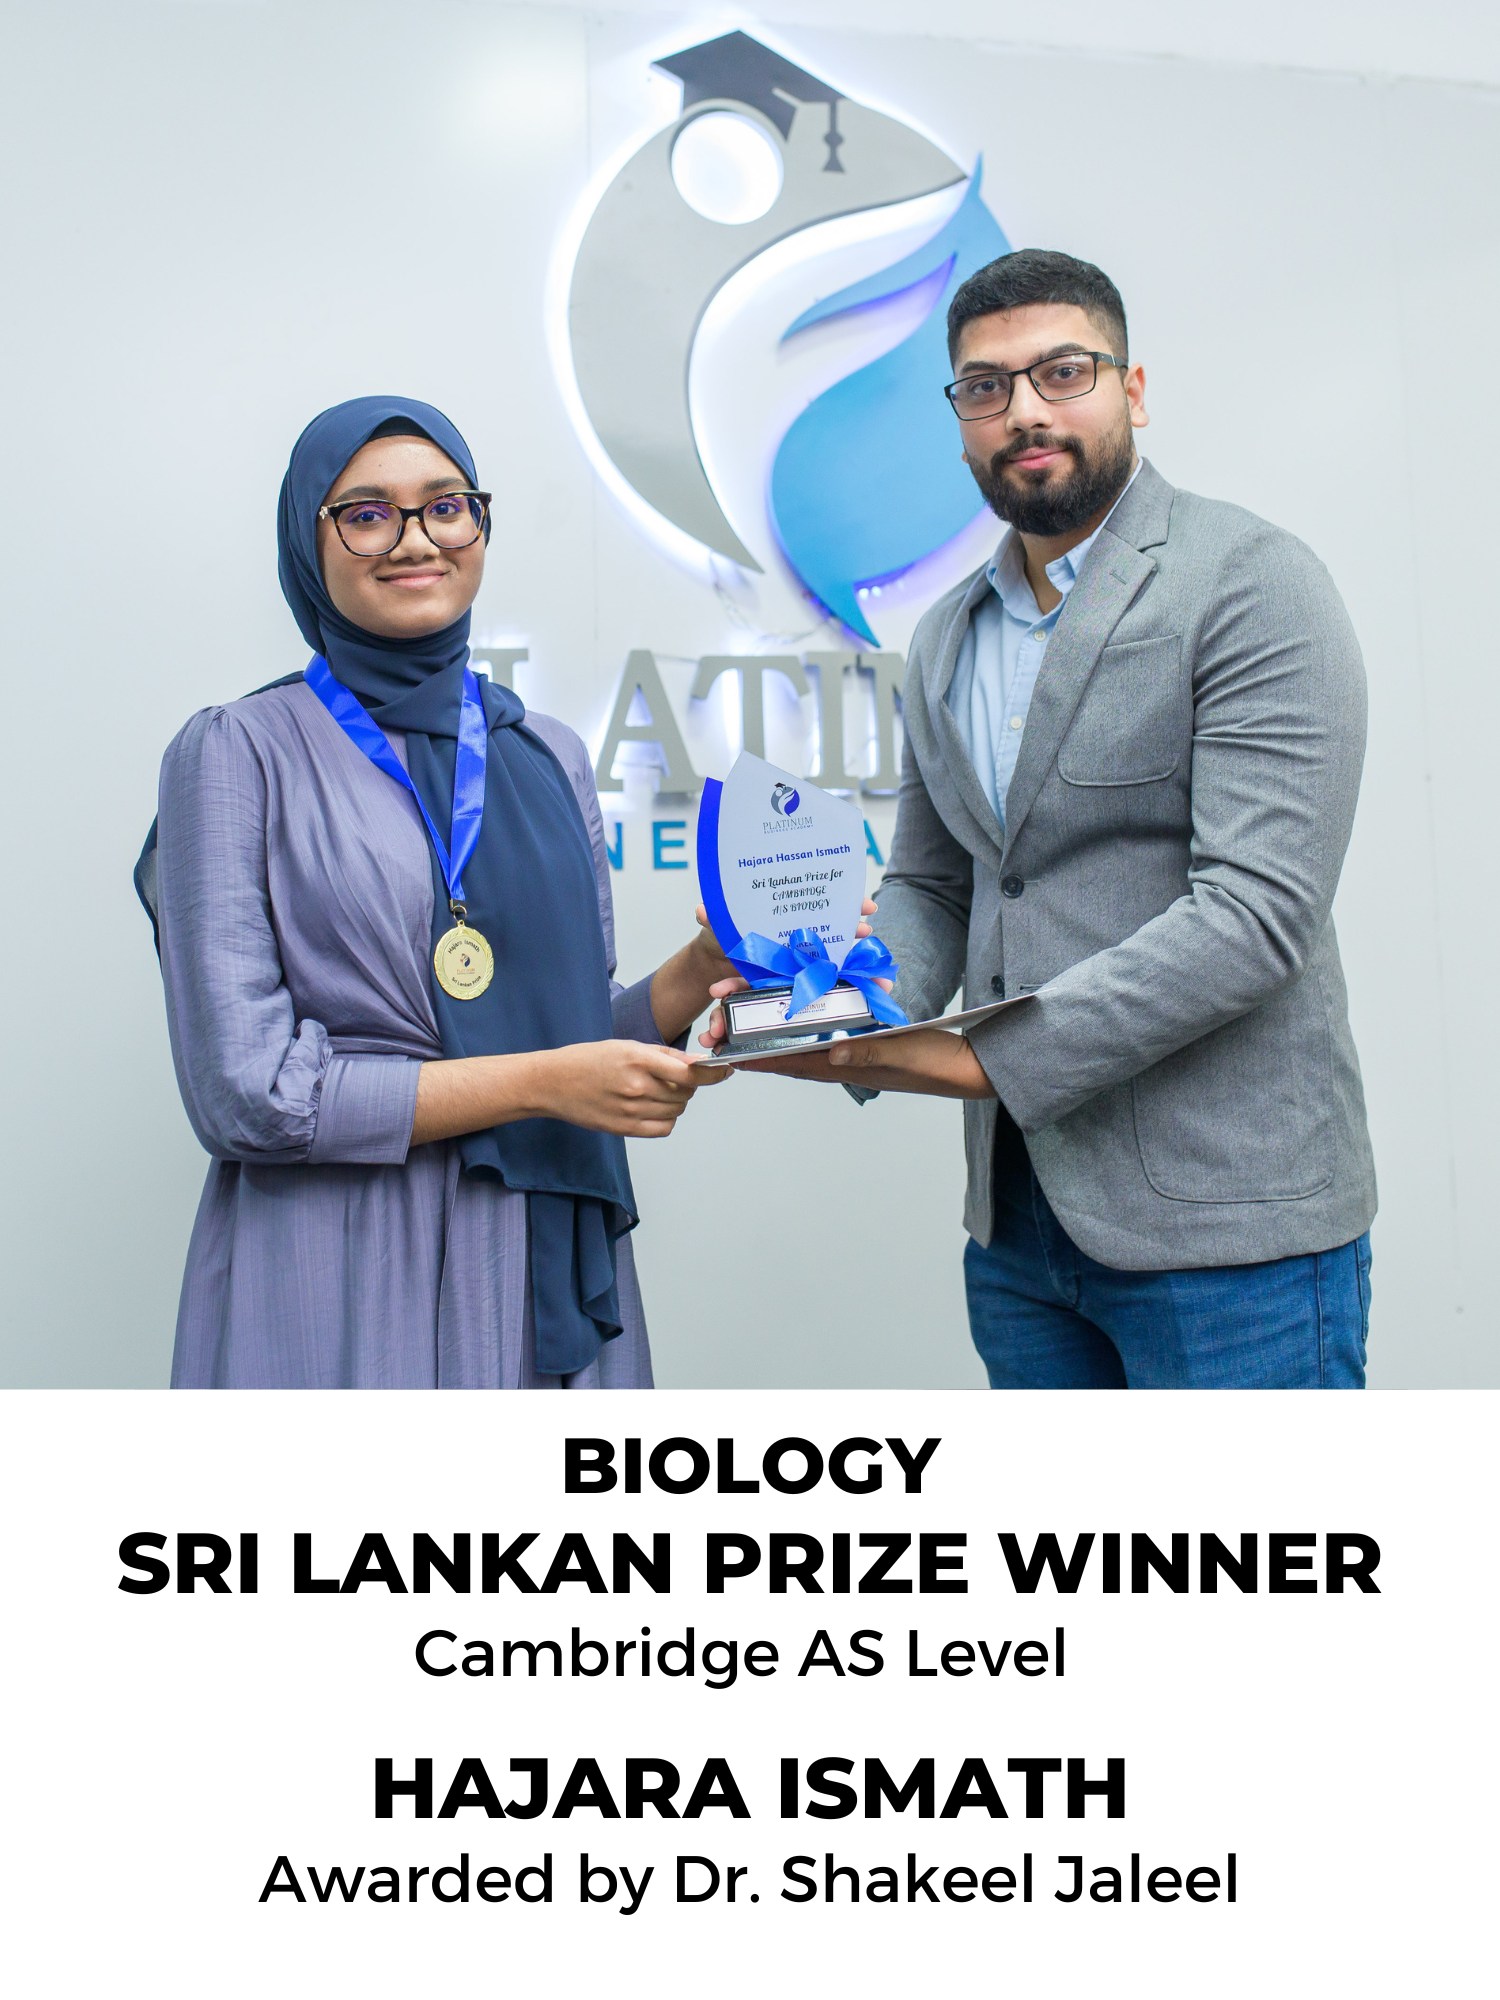 Cambridge AS Level Biology Sri Lankan Prize Winner: Hajara Ismath
Lecturer: Dr. Shakeel Jaleel